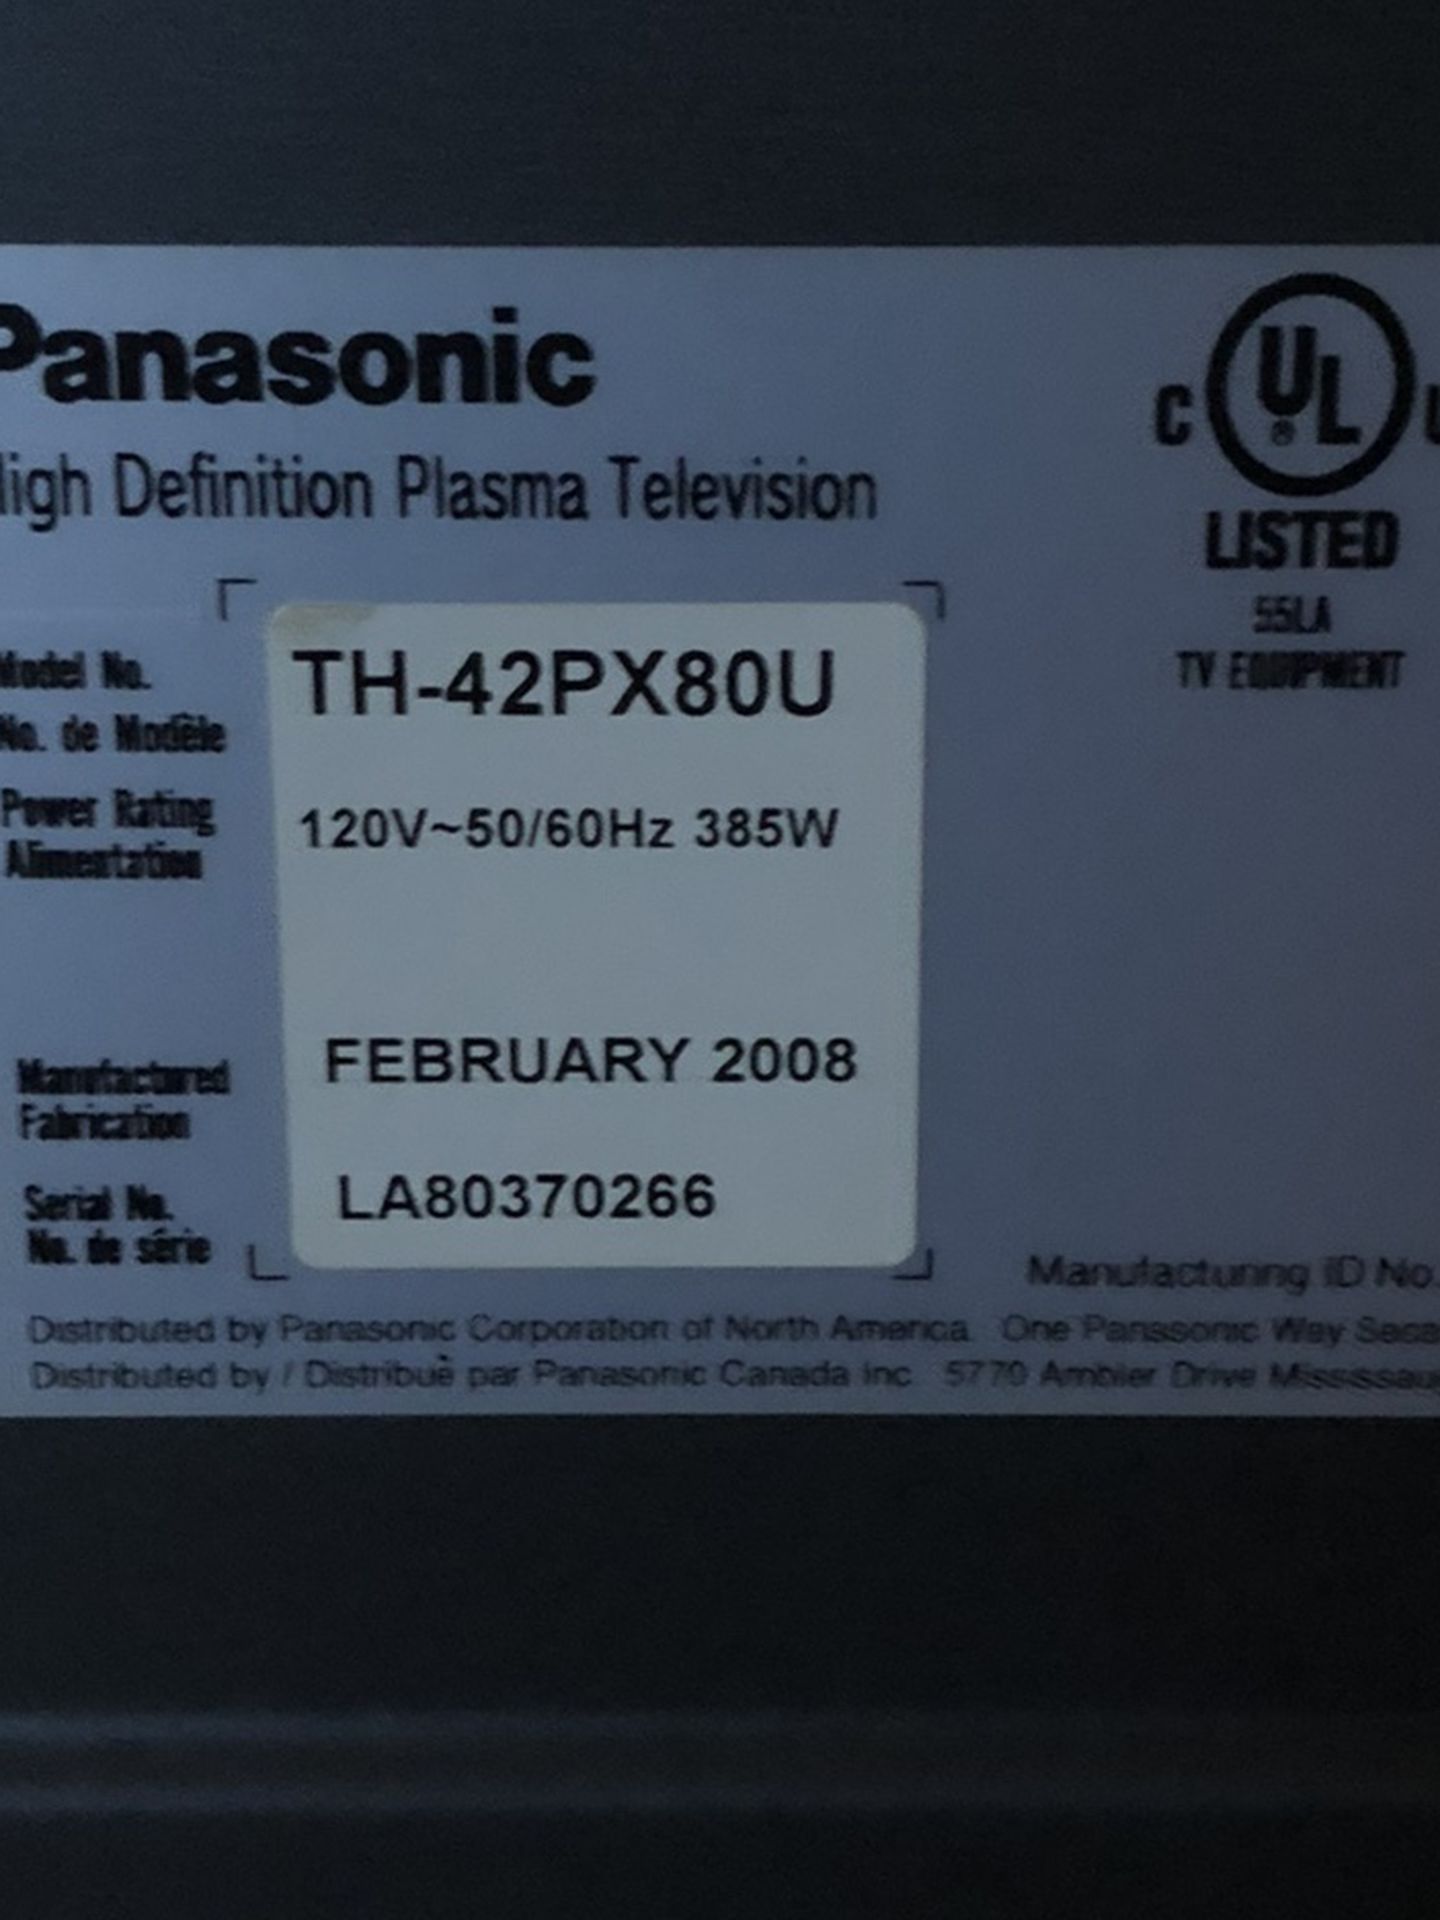 42 inch plasma high definition Panasonic TV